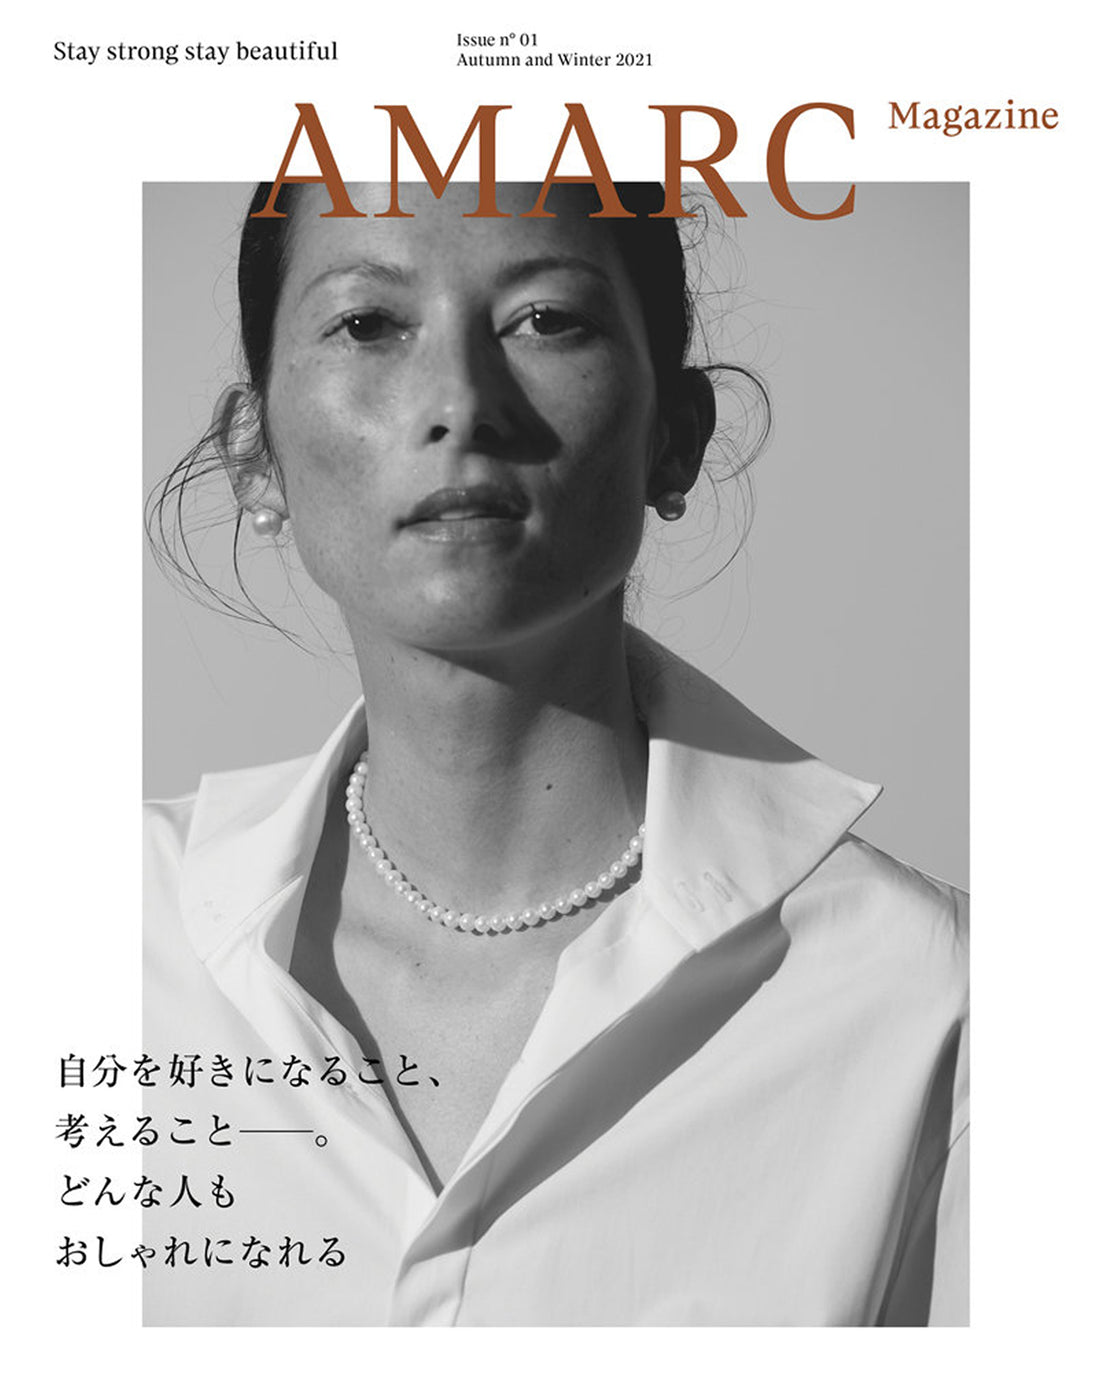 AMARC magazine issue.01